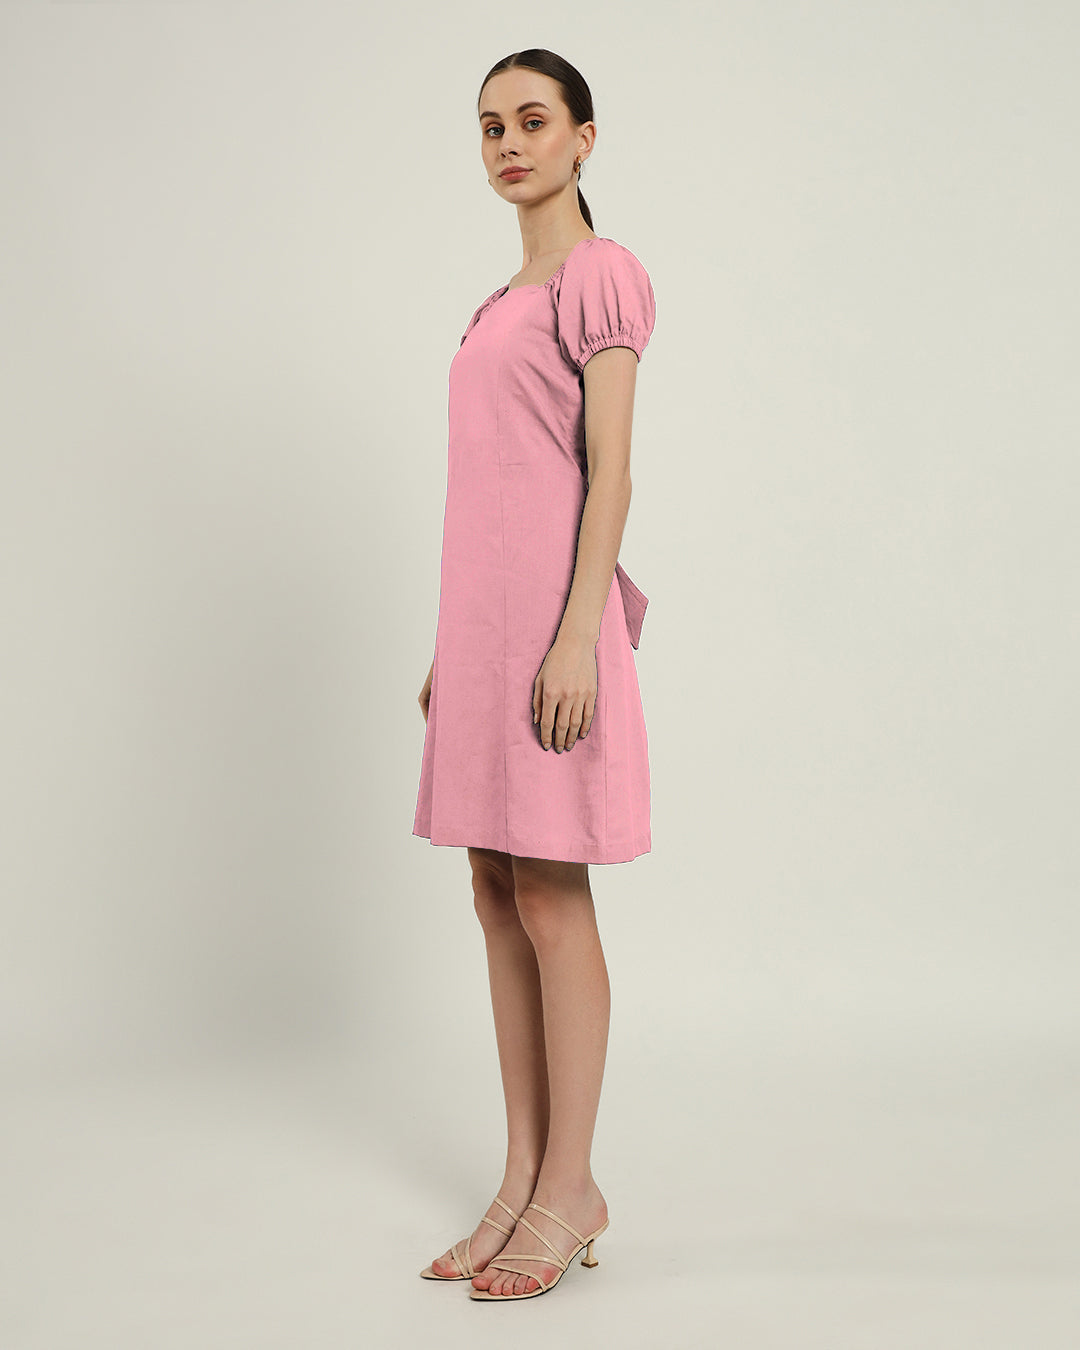 The Arar Fondant Pink Dress